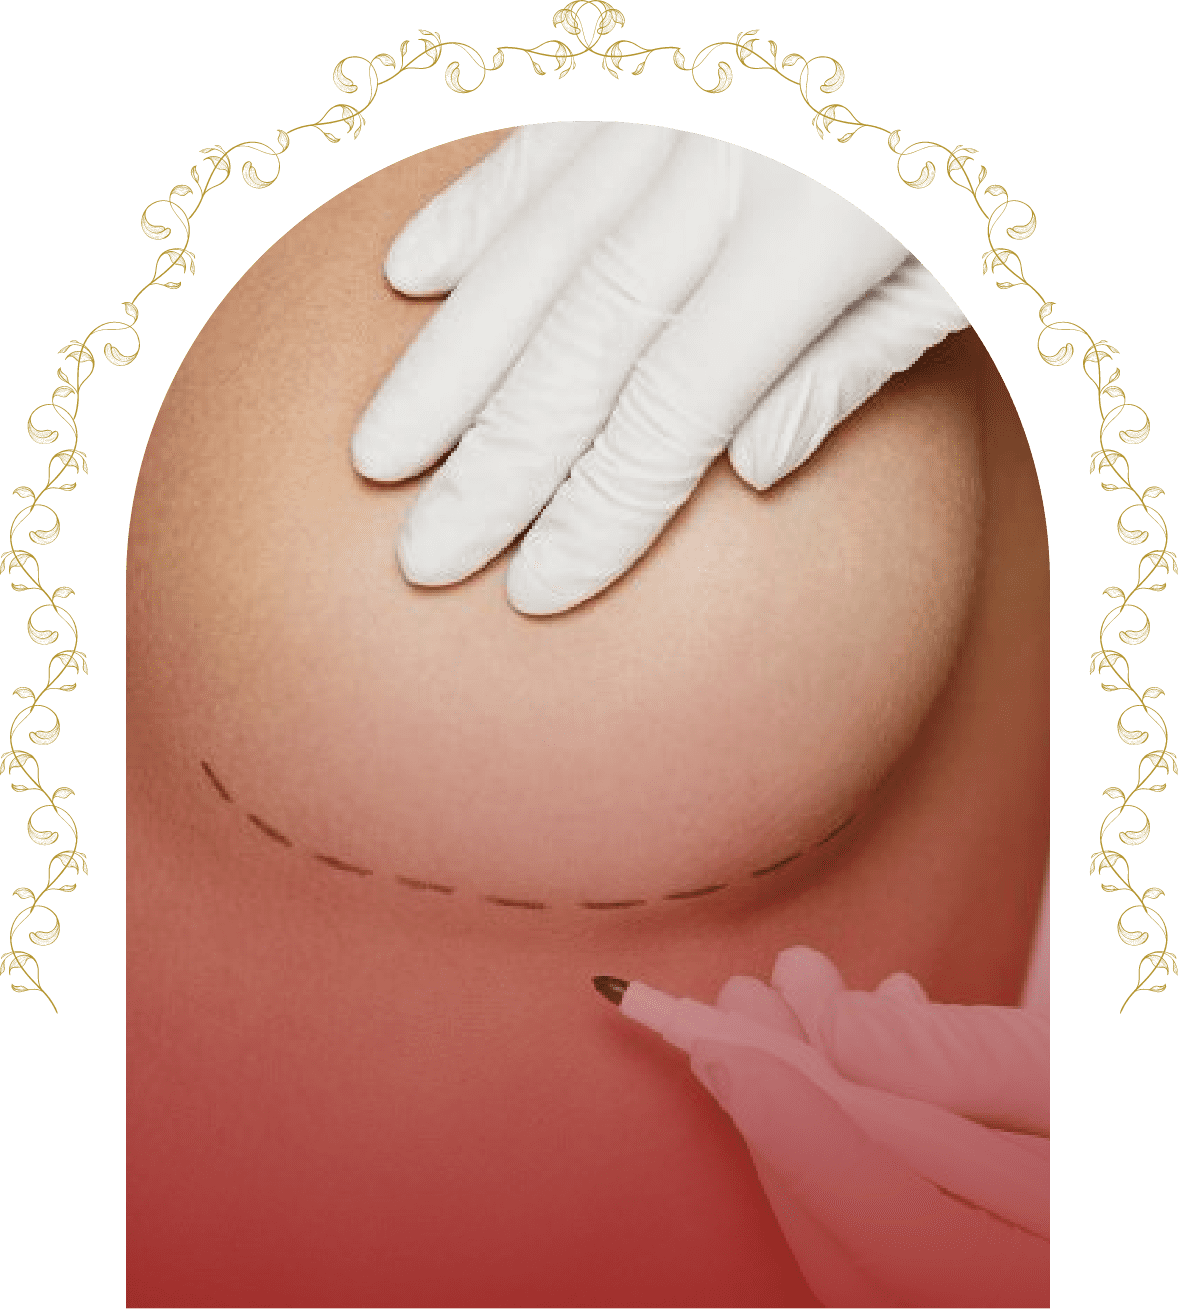 breast augmentation surgery in jaipur